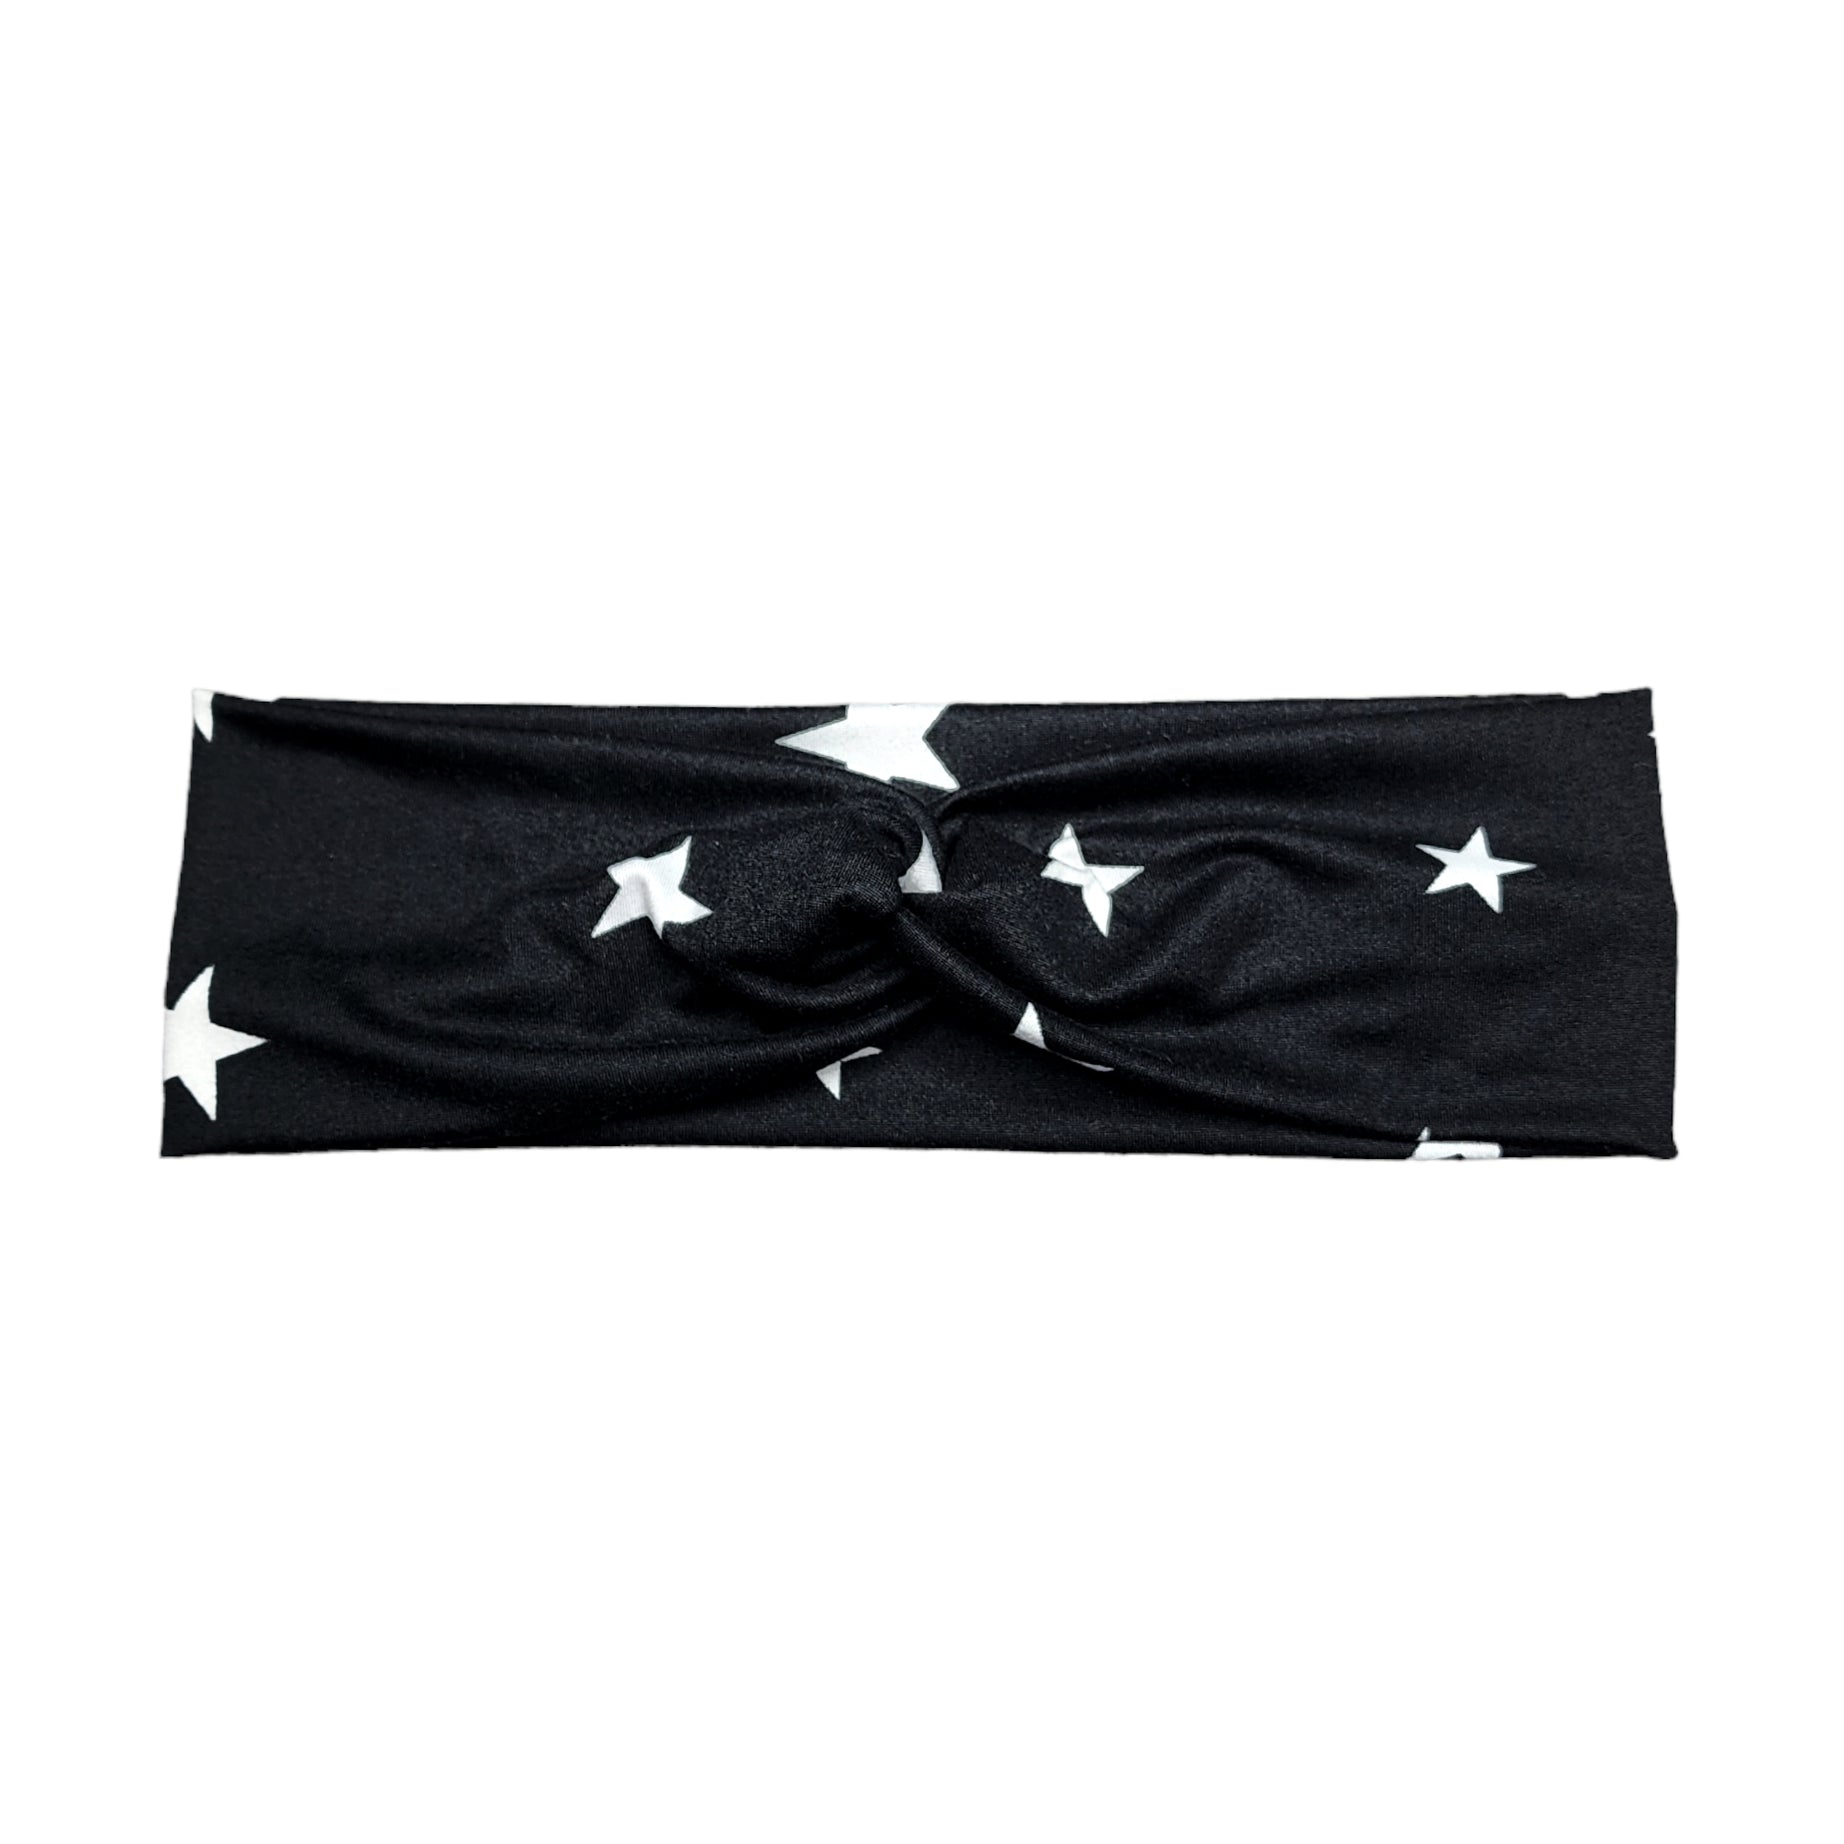 Black Star Print Headband for Women, Super Soft Collection